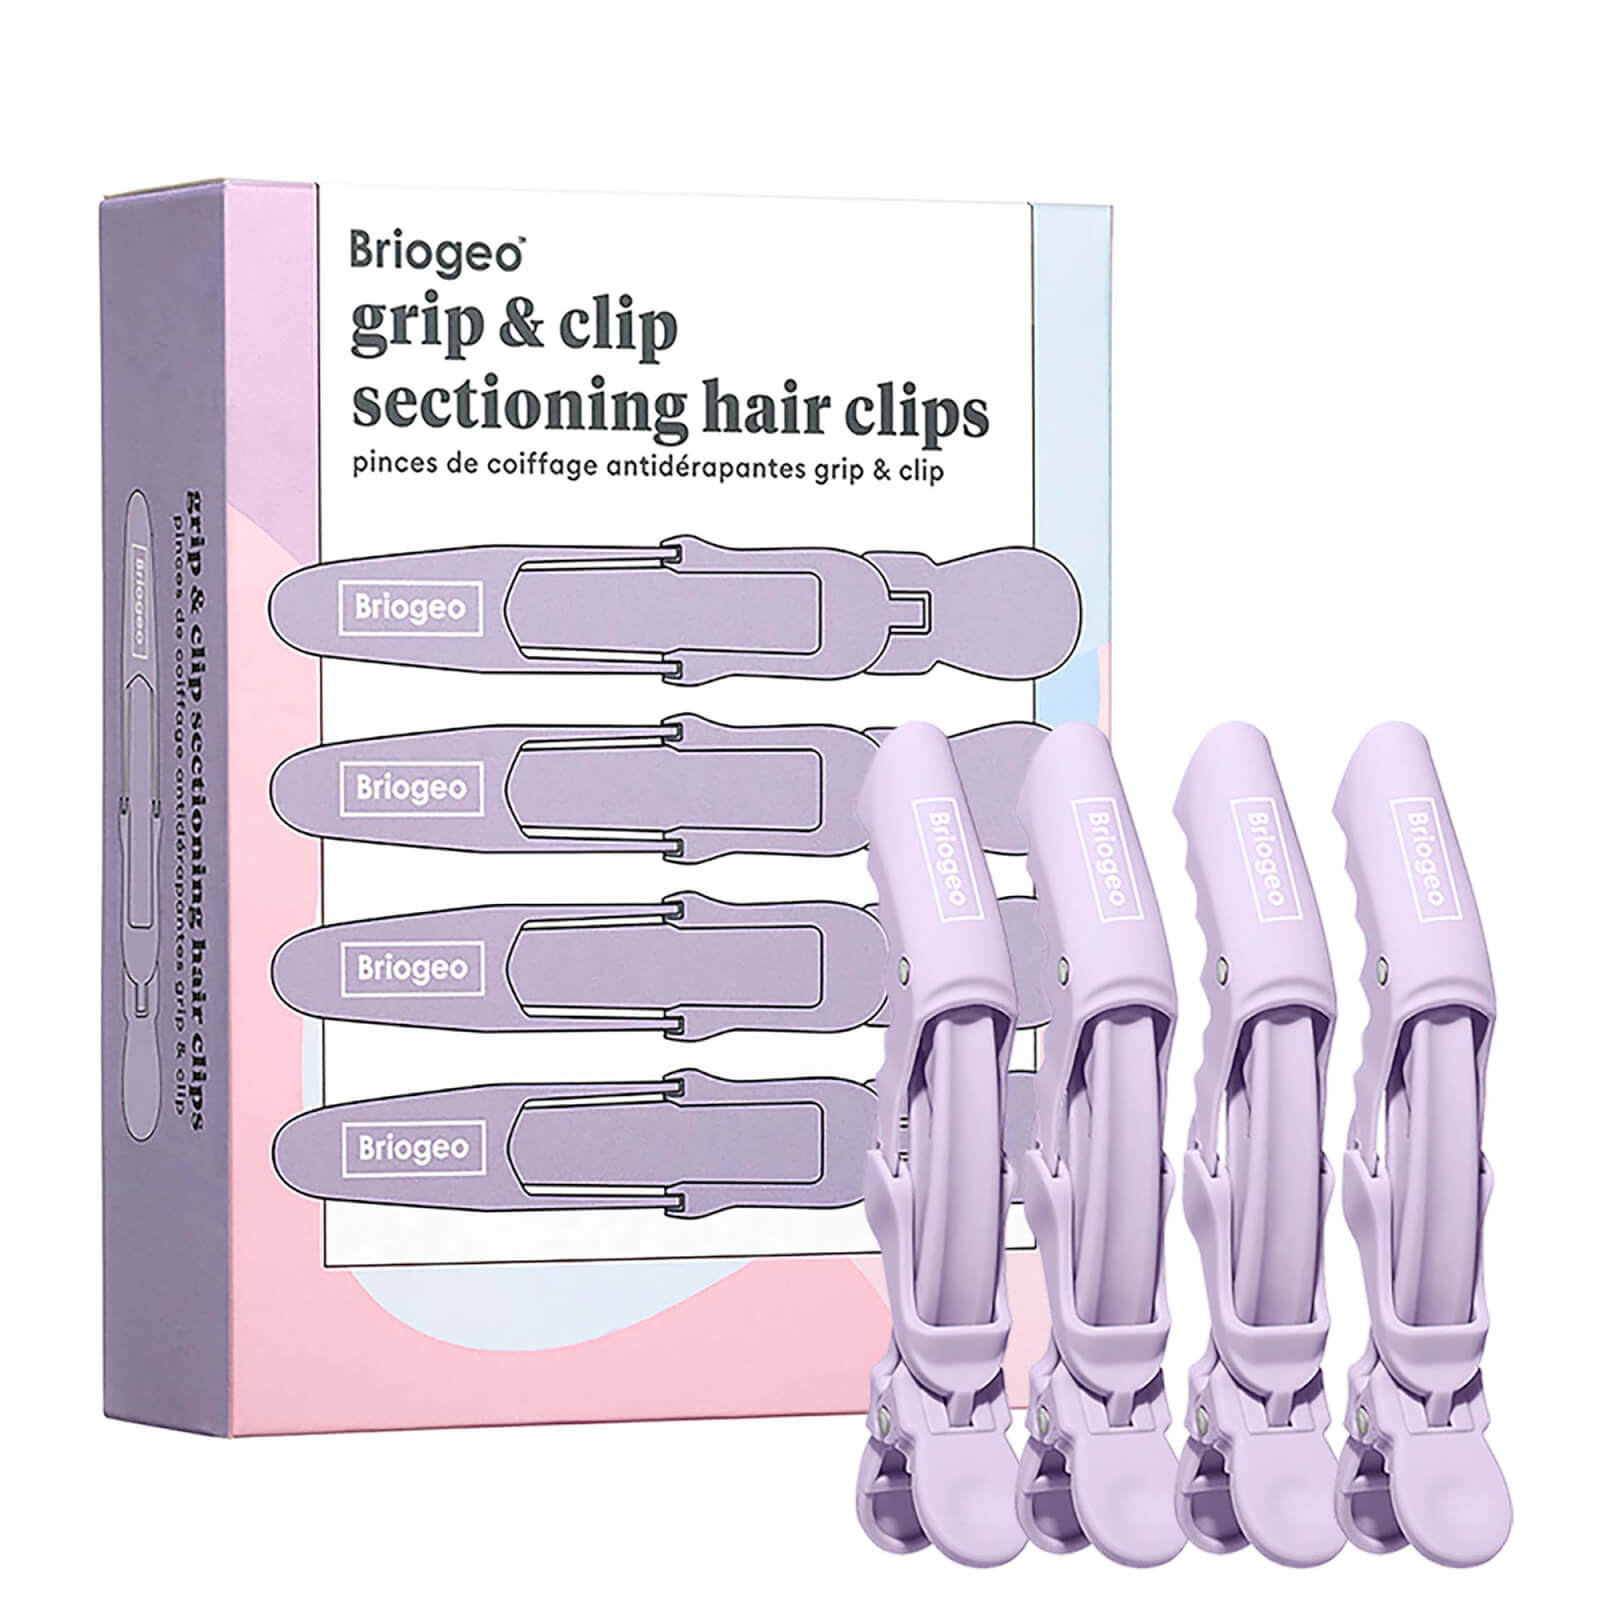 Briogeo Grip & Clip Sectioning Hair Clips